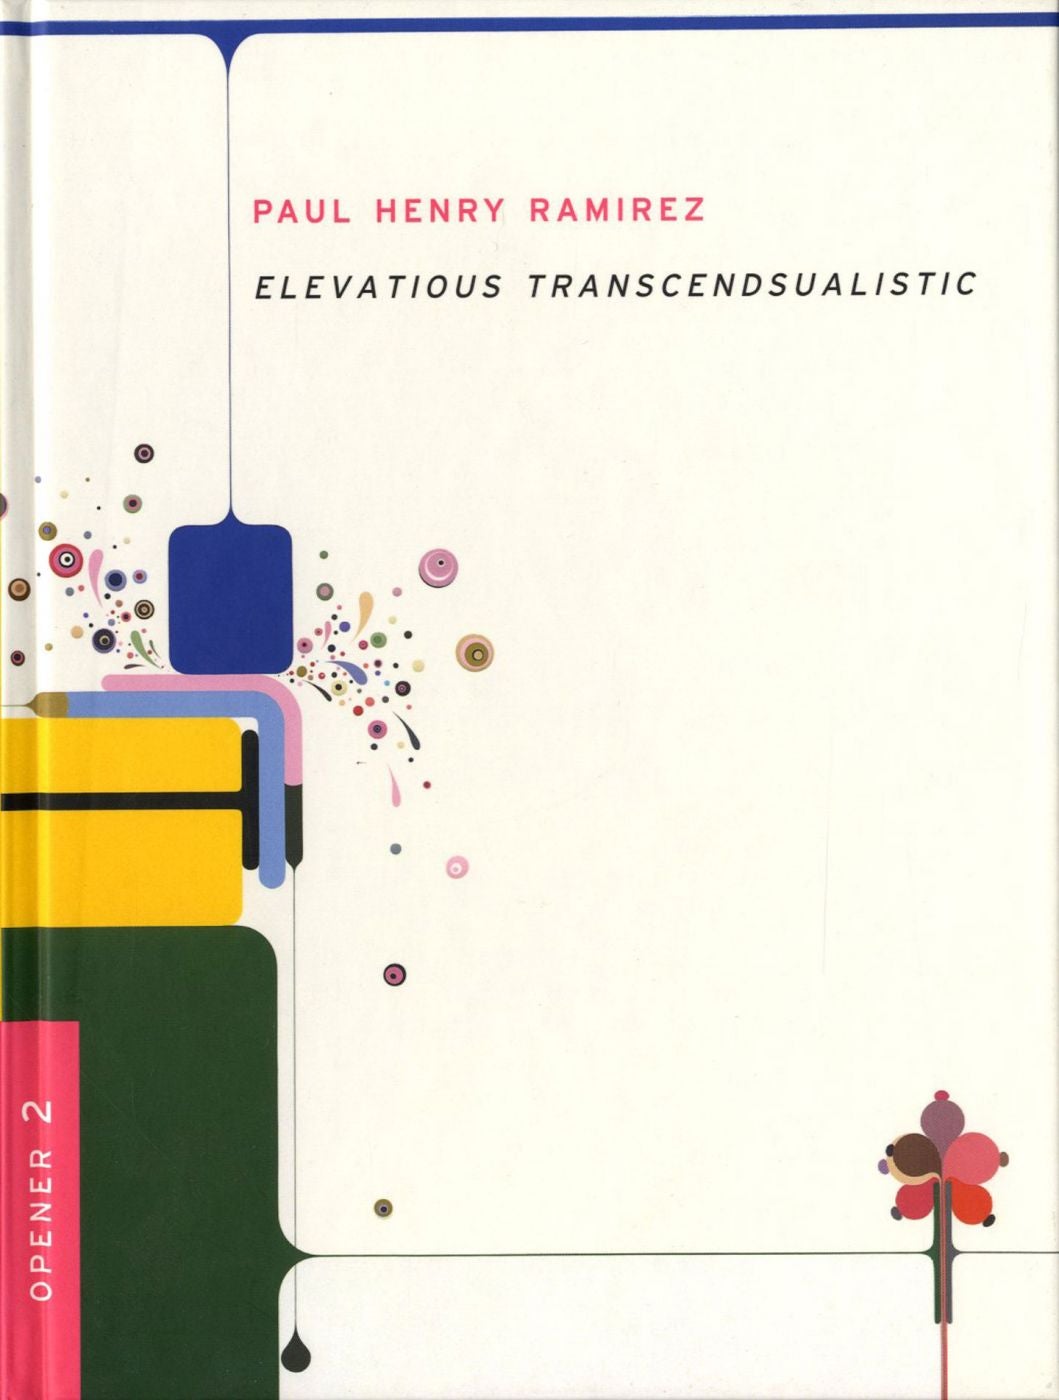 Paul Henry Ramirez: Elevatious Transcendsualistic